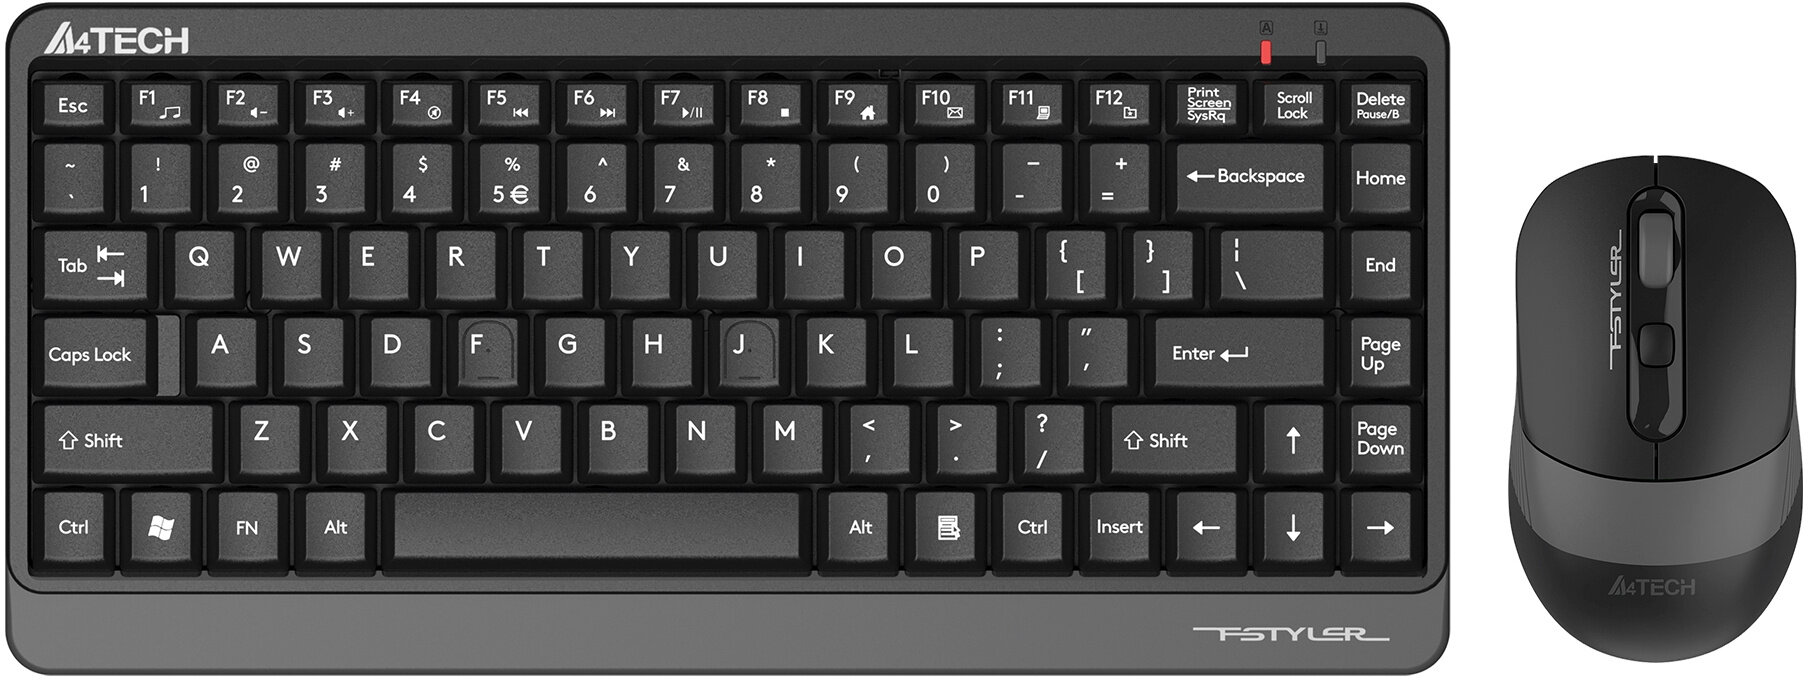 Клавиатура + мышь A4Tech Fstyler FG1110 клав: черный/серый мышь: черный/серый USB